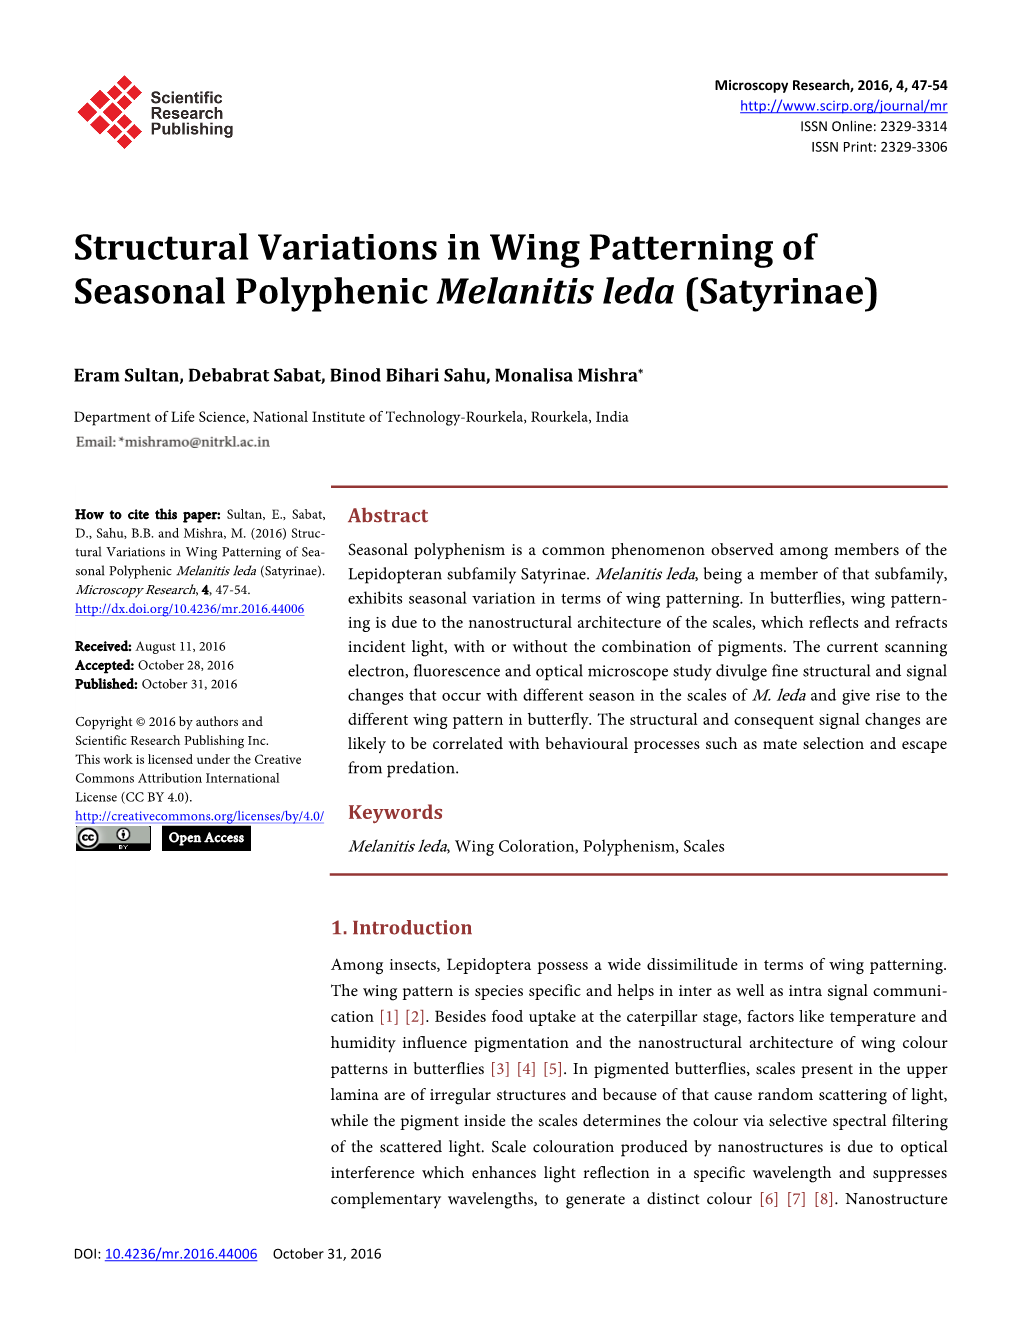 Structural Variations in Wing Patterning of Seasonal Polyphenic Melanitis Leda (Satyrinae)